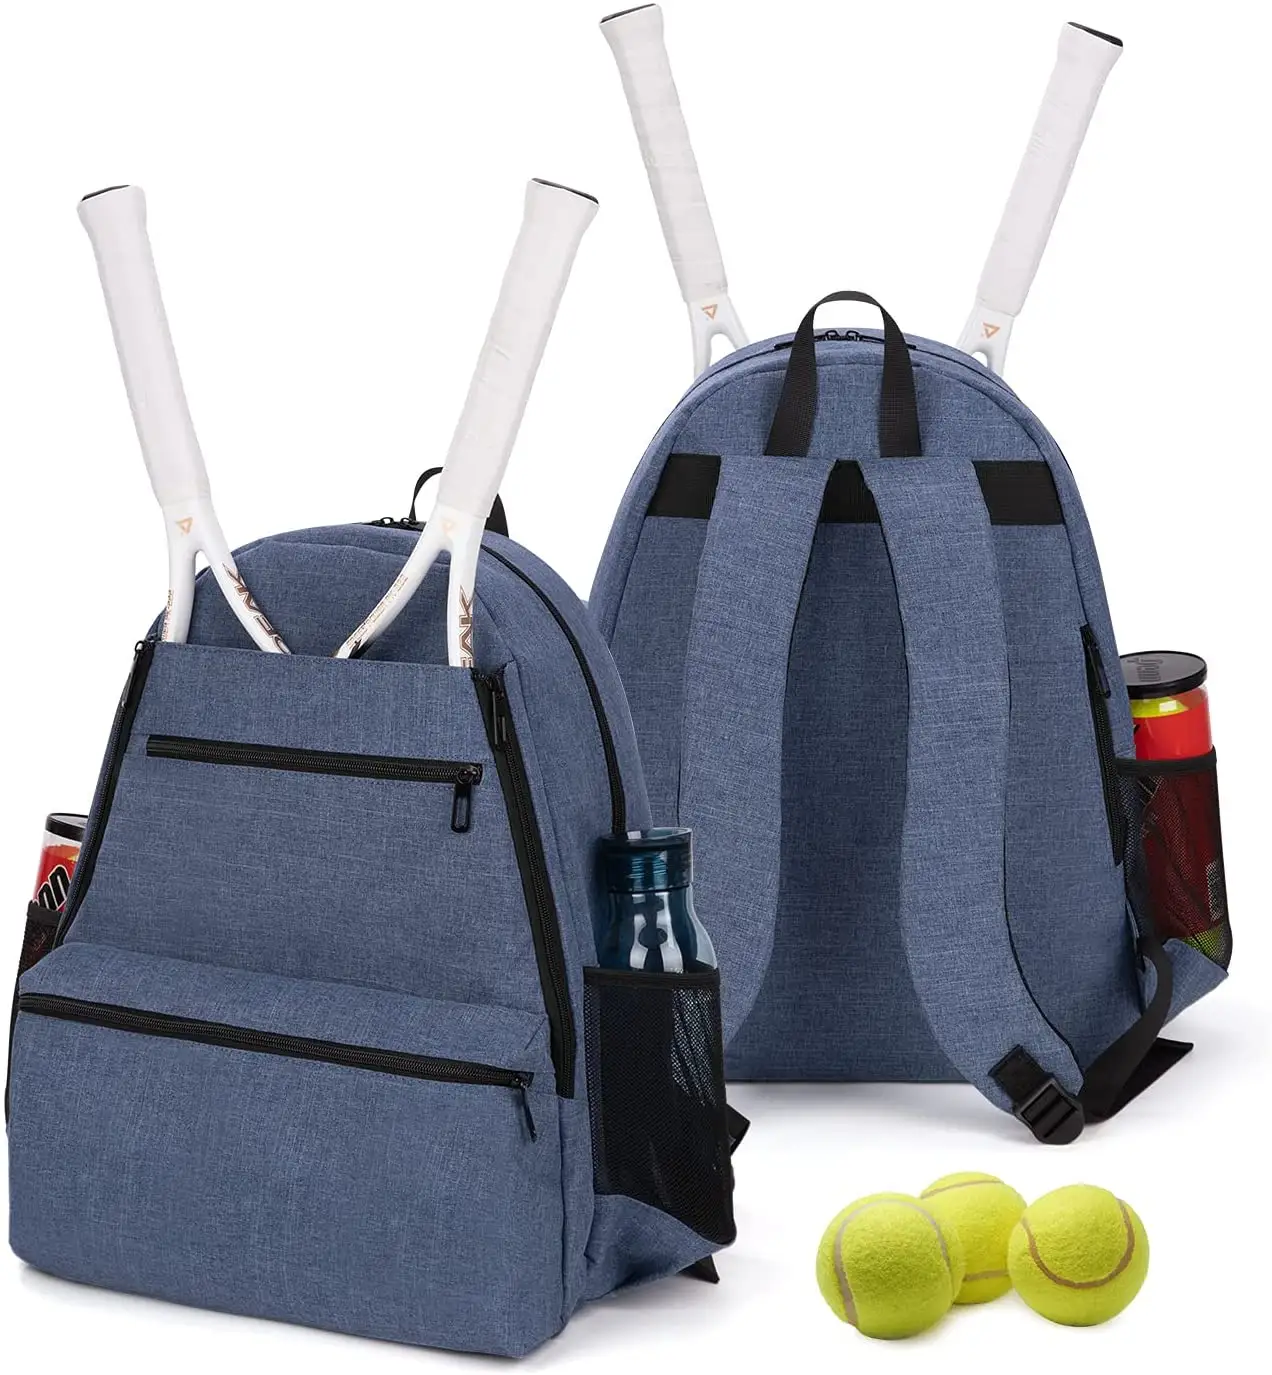 2021 Hot Sale Large Capacity 6-Pack Tennis Racket Bag For Unisex Lightweight Simple Badminton Racket Bag With Multi-Pocket